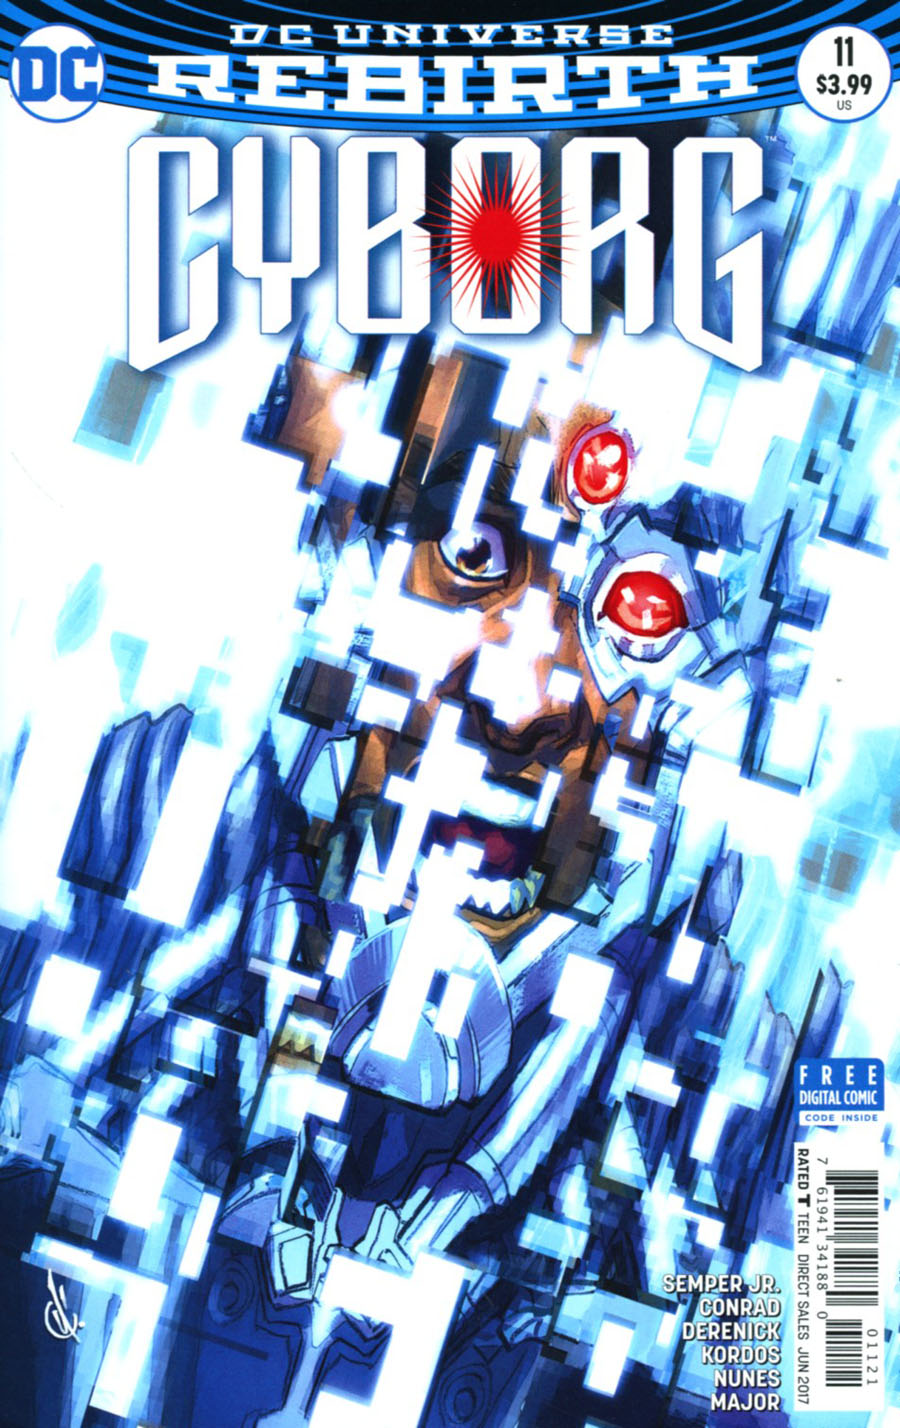 Cyborg Vol 2 #11 Cover B Variant Carlos DAnda Cover